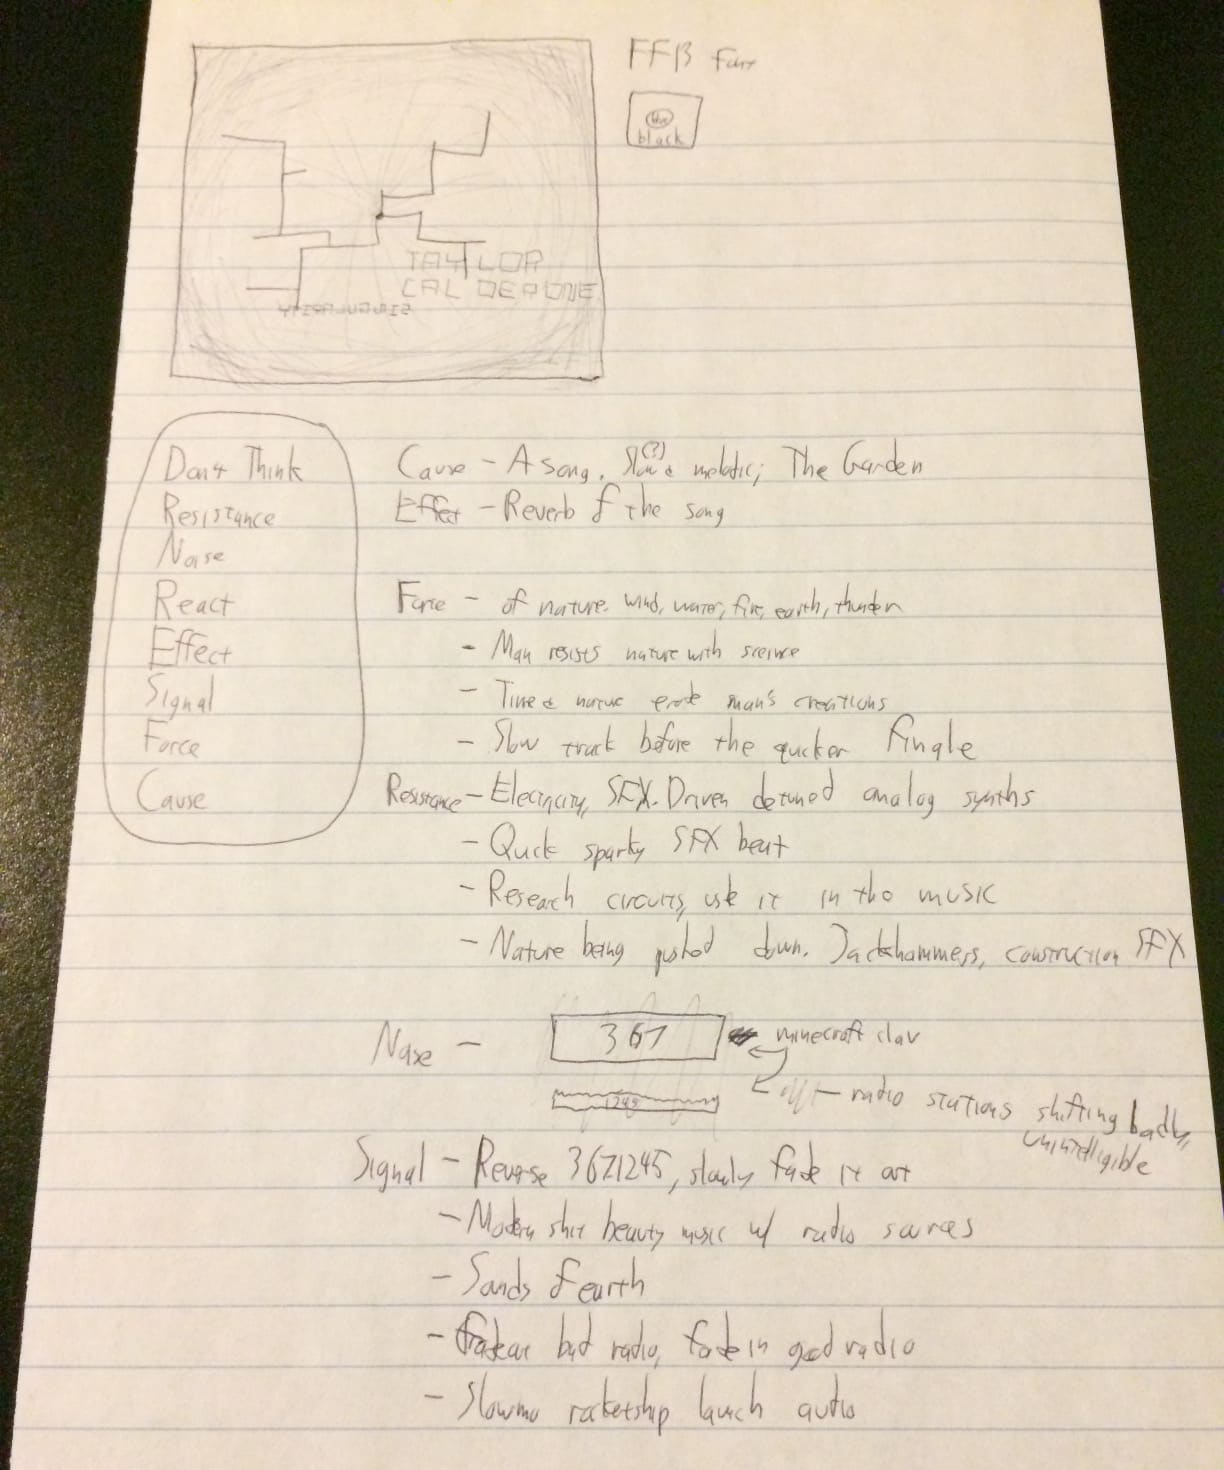 Singularity design document, handwritten